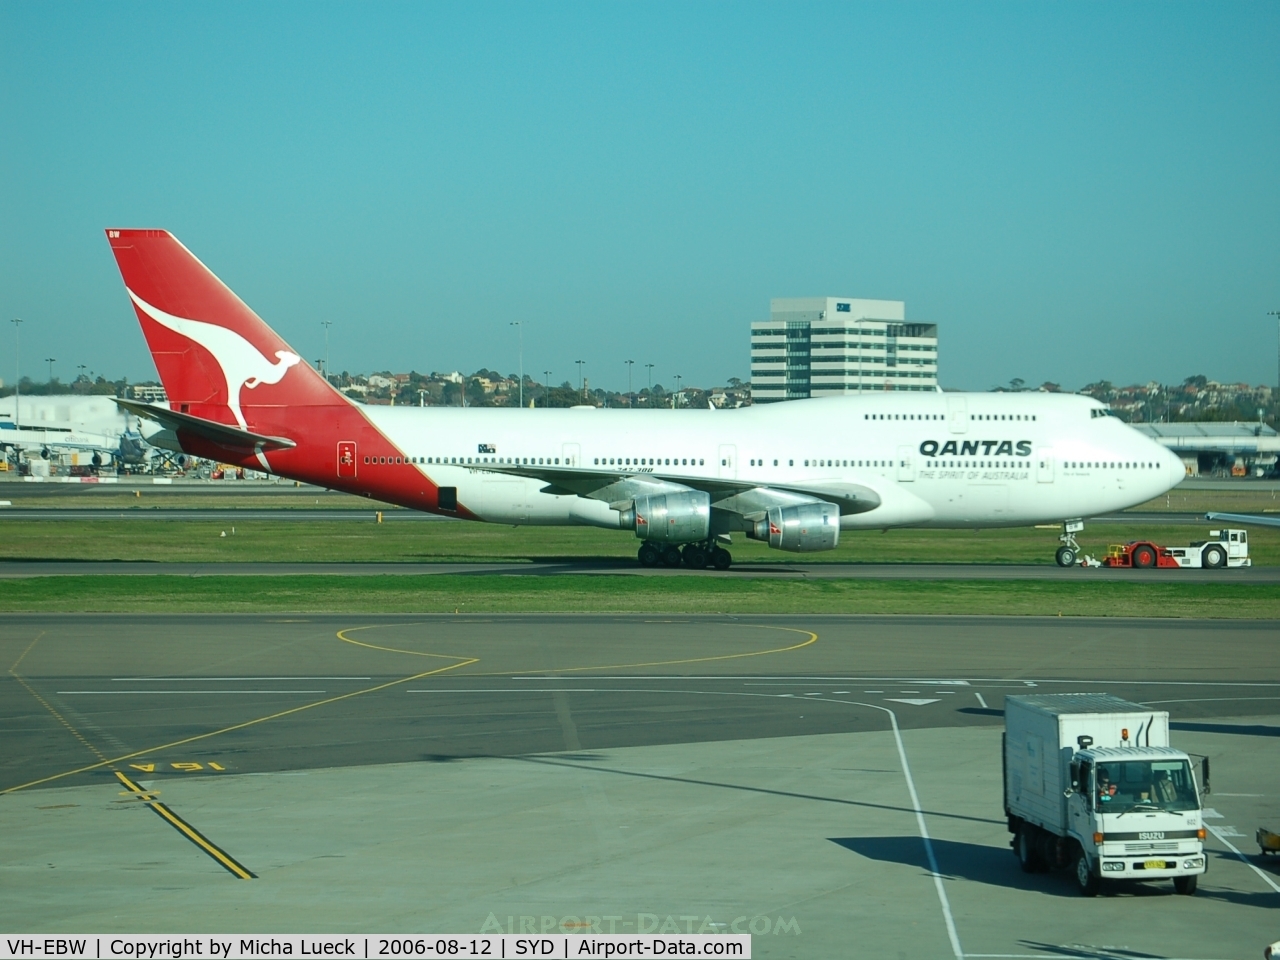 VH-EBW, 1986 Boeing 747-338 C/N 23408, Qantas' B747-300 (VH-EBW) being towed to the gate